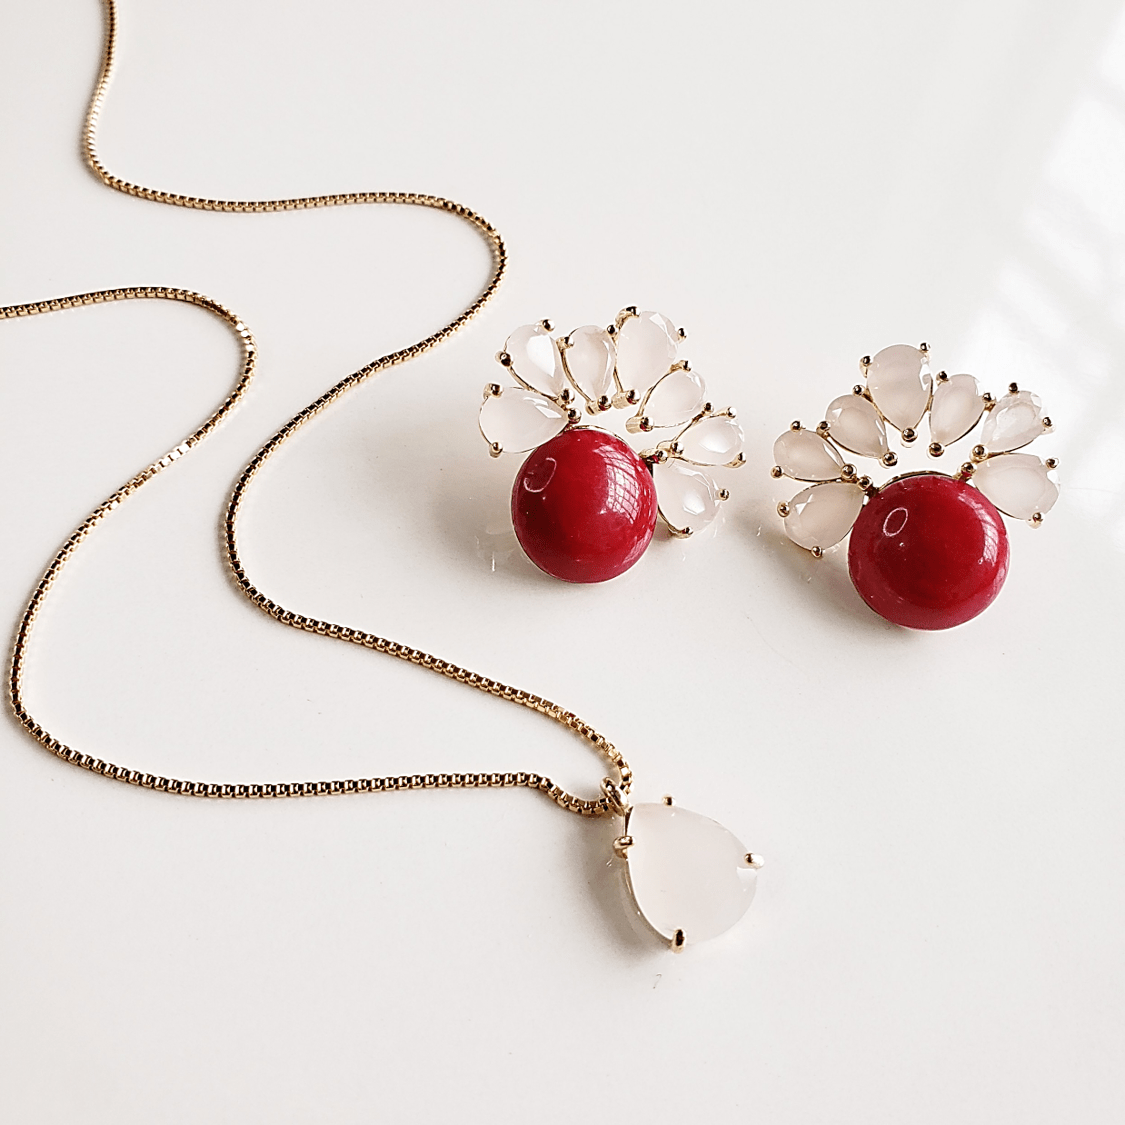 1-Conjunto colar e brinco de cristais leitosos e resina vermelho rubi - Modelo Della Flora